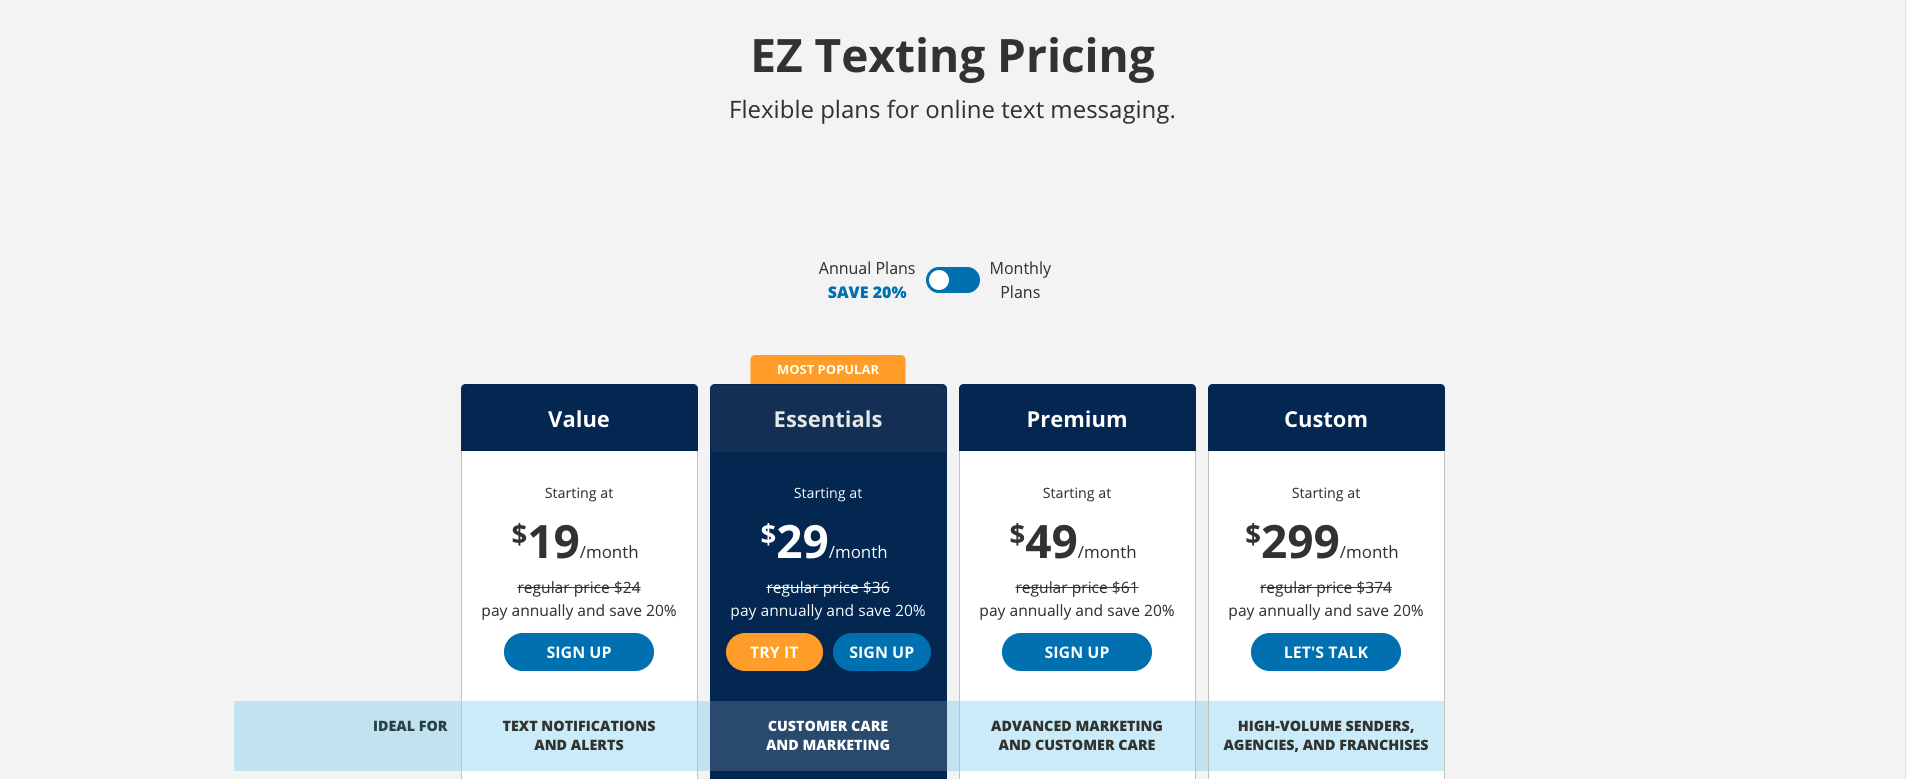 EZ Texting Pricing